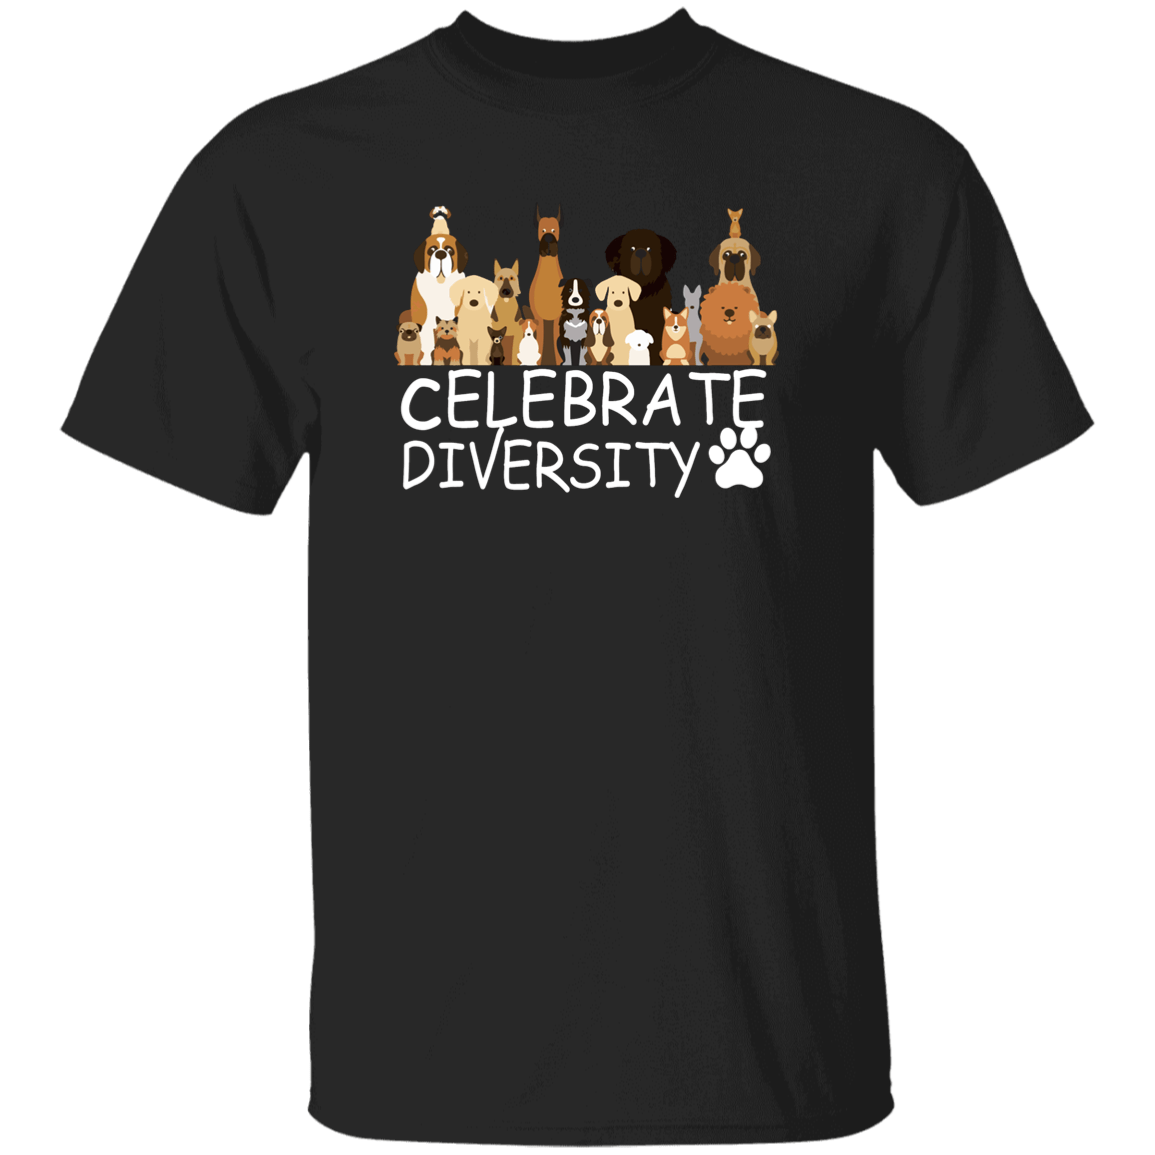 Celebrate Diversity - T Shirt.